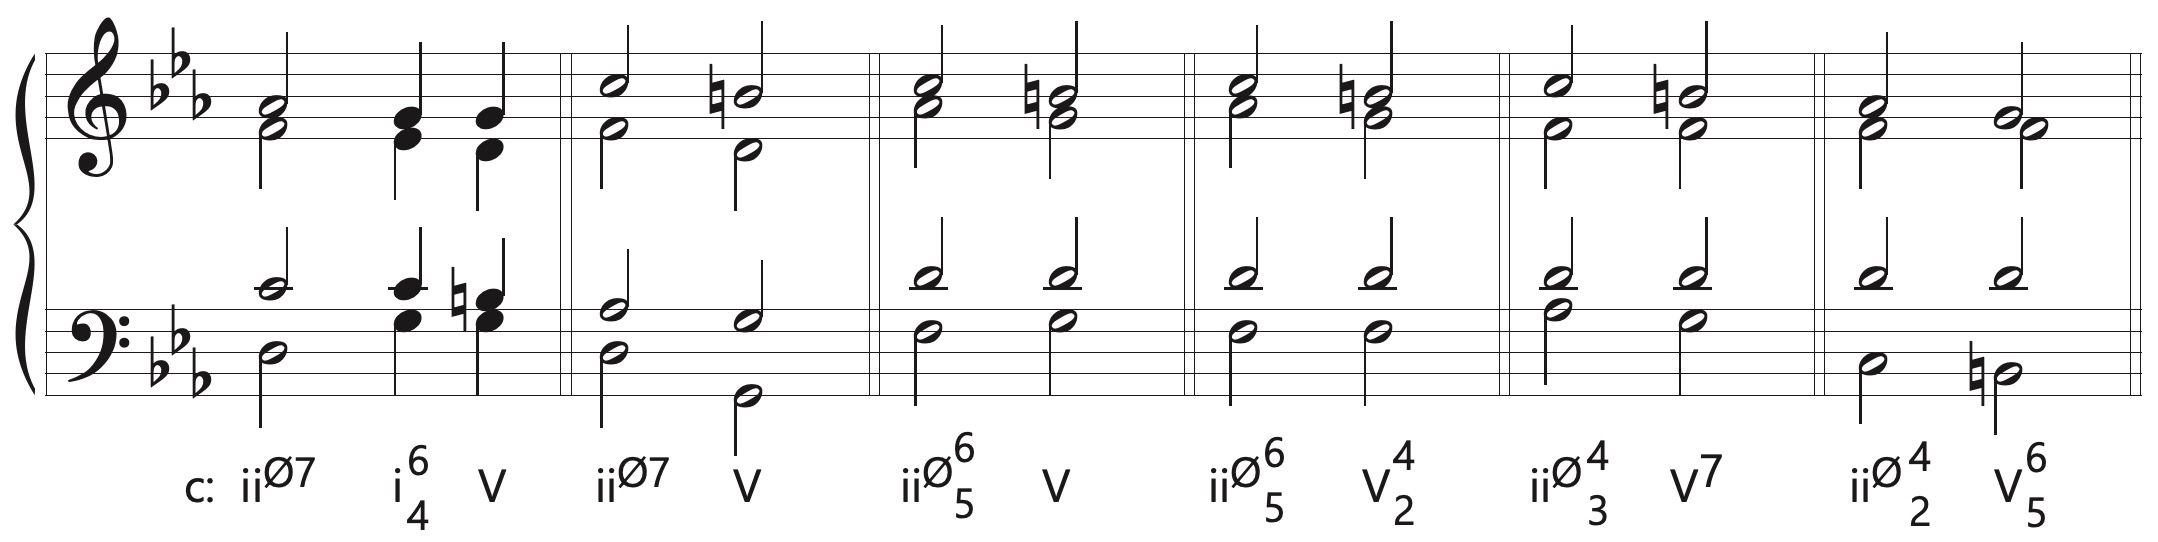 supertonic seventh chords